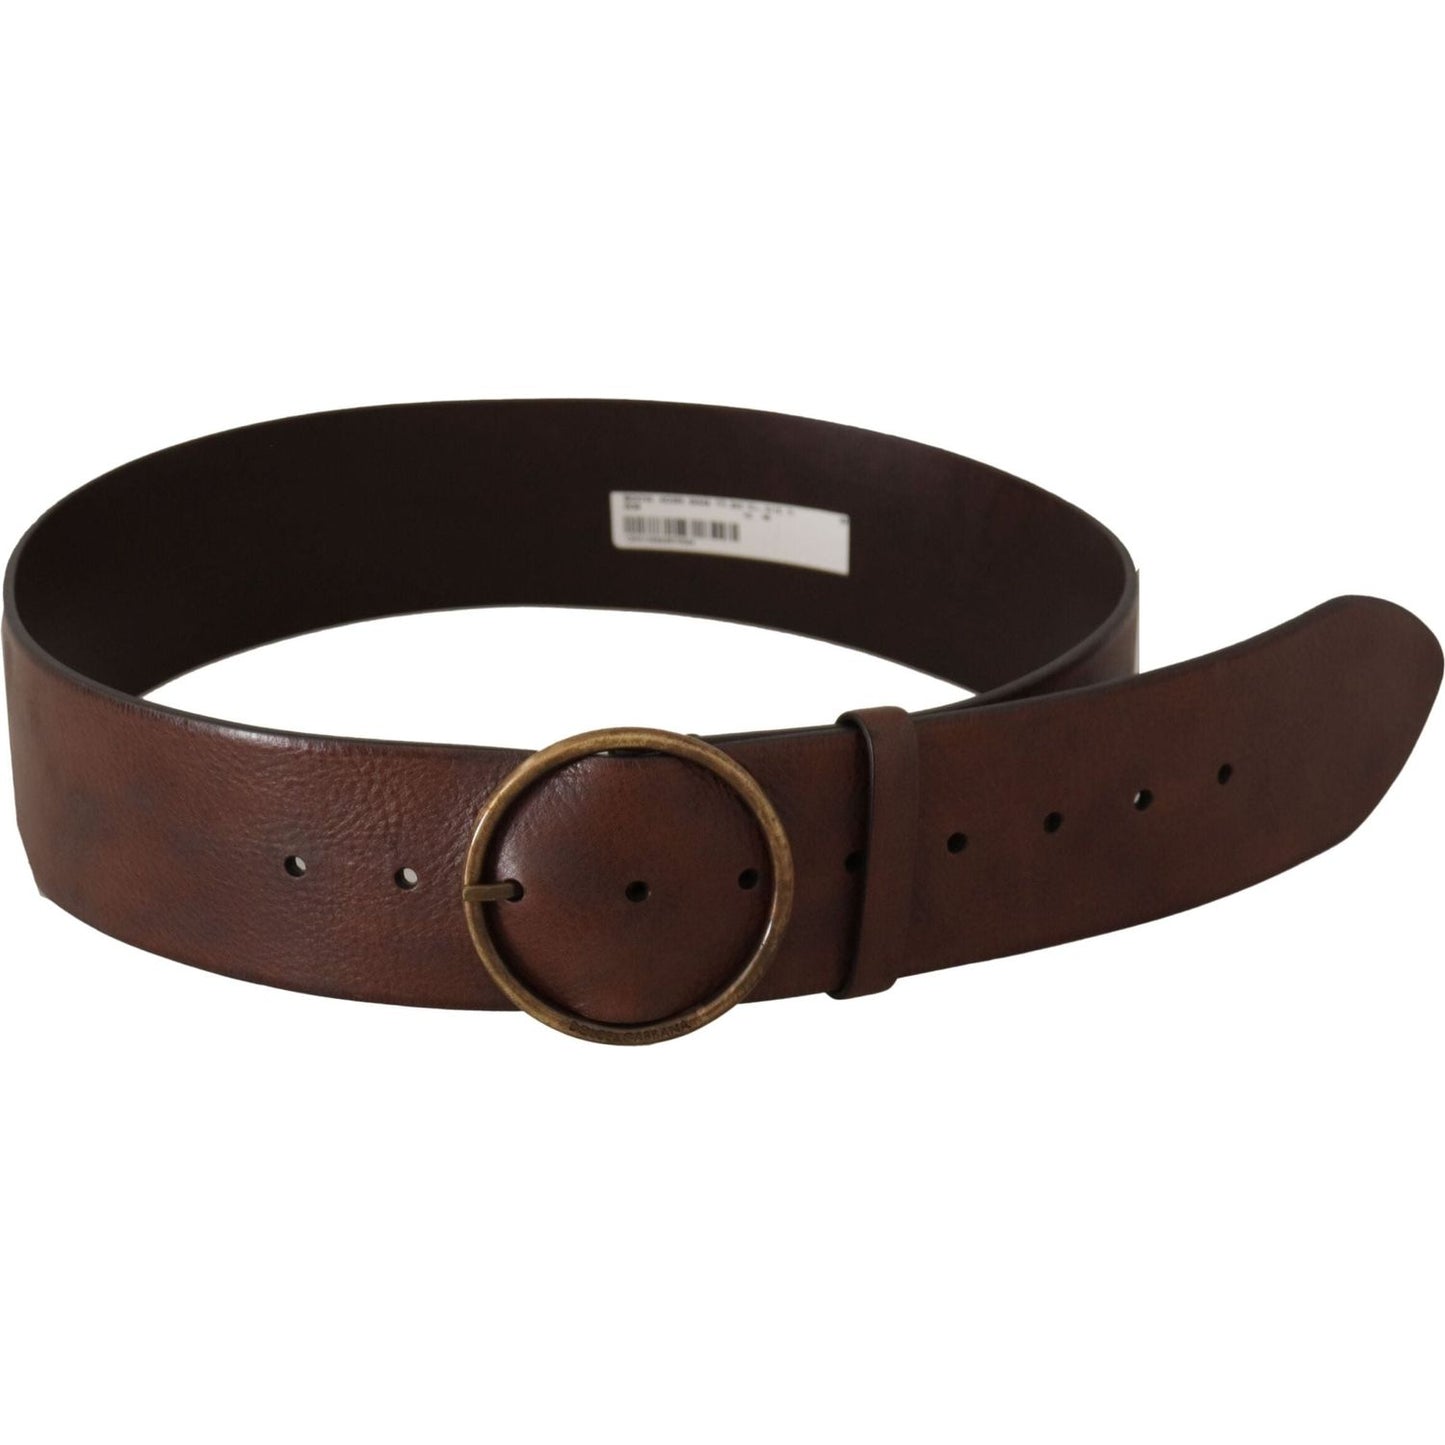 Dolce & Gabbana Elegant Leather Belt with Engraved Buckle dark-brown-wide-waist-leather-metal-round-buckle-belt IMG_9737-2-scaled-7e74fcc1-225.jpg